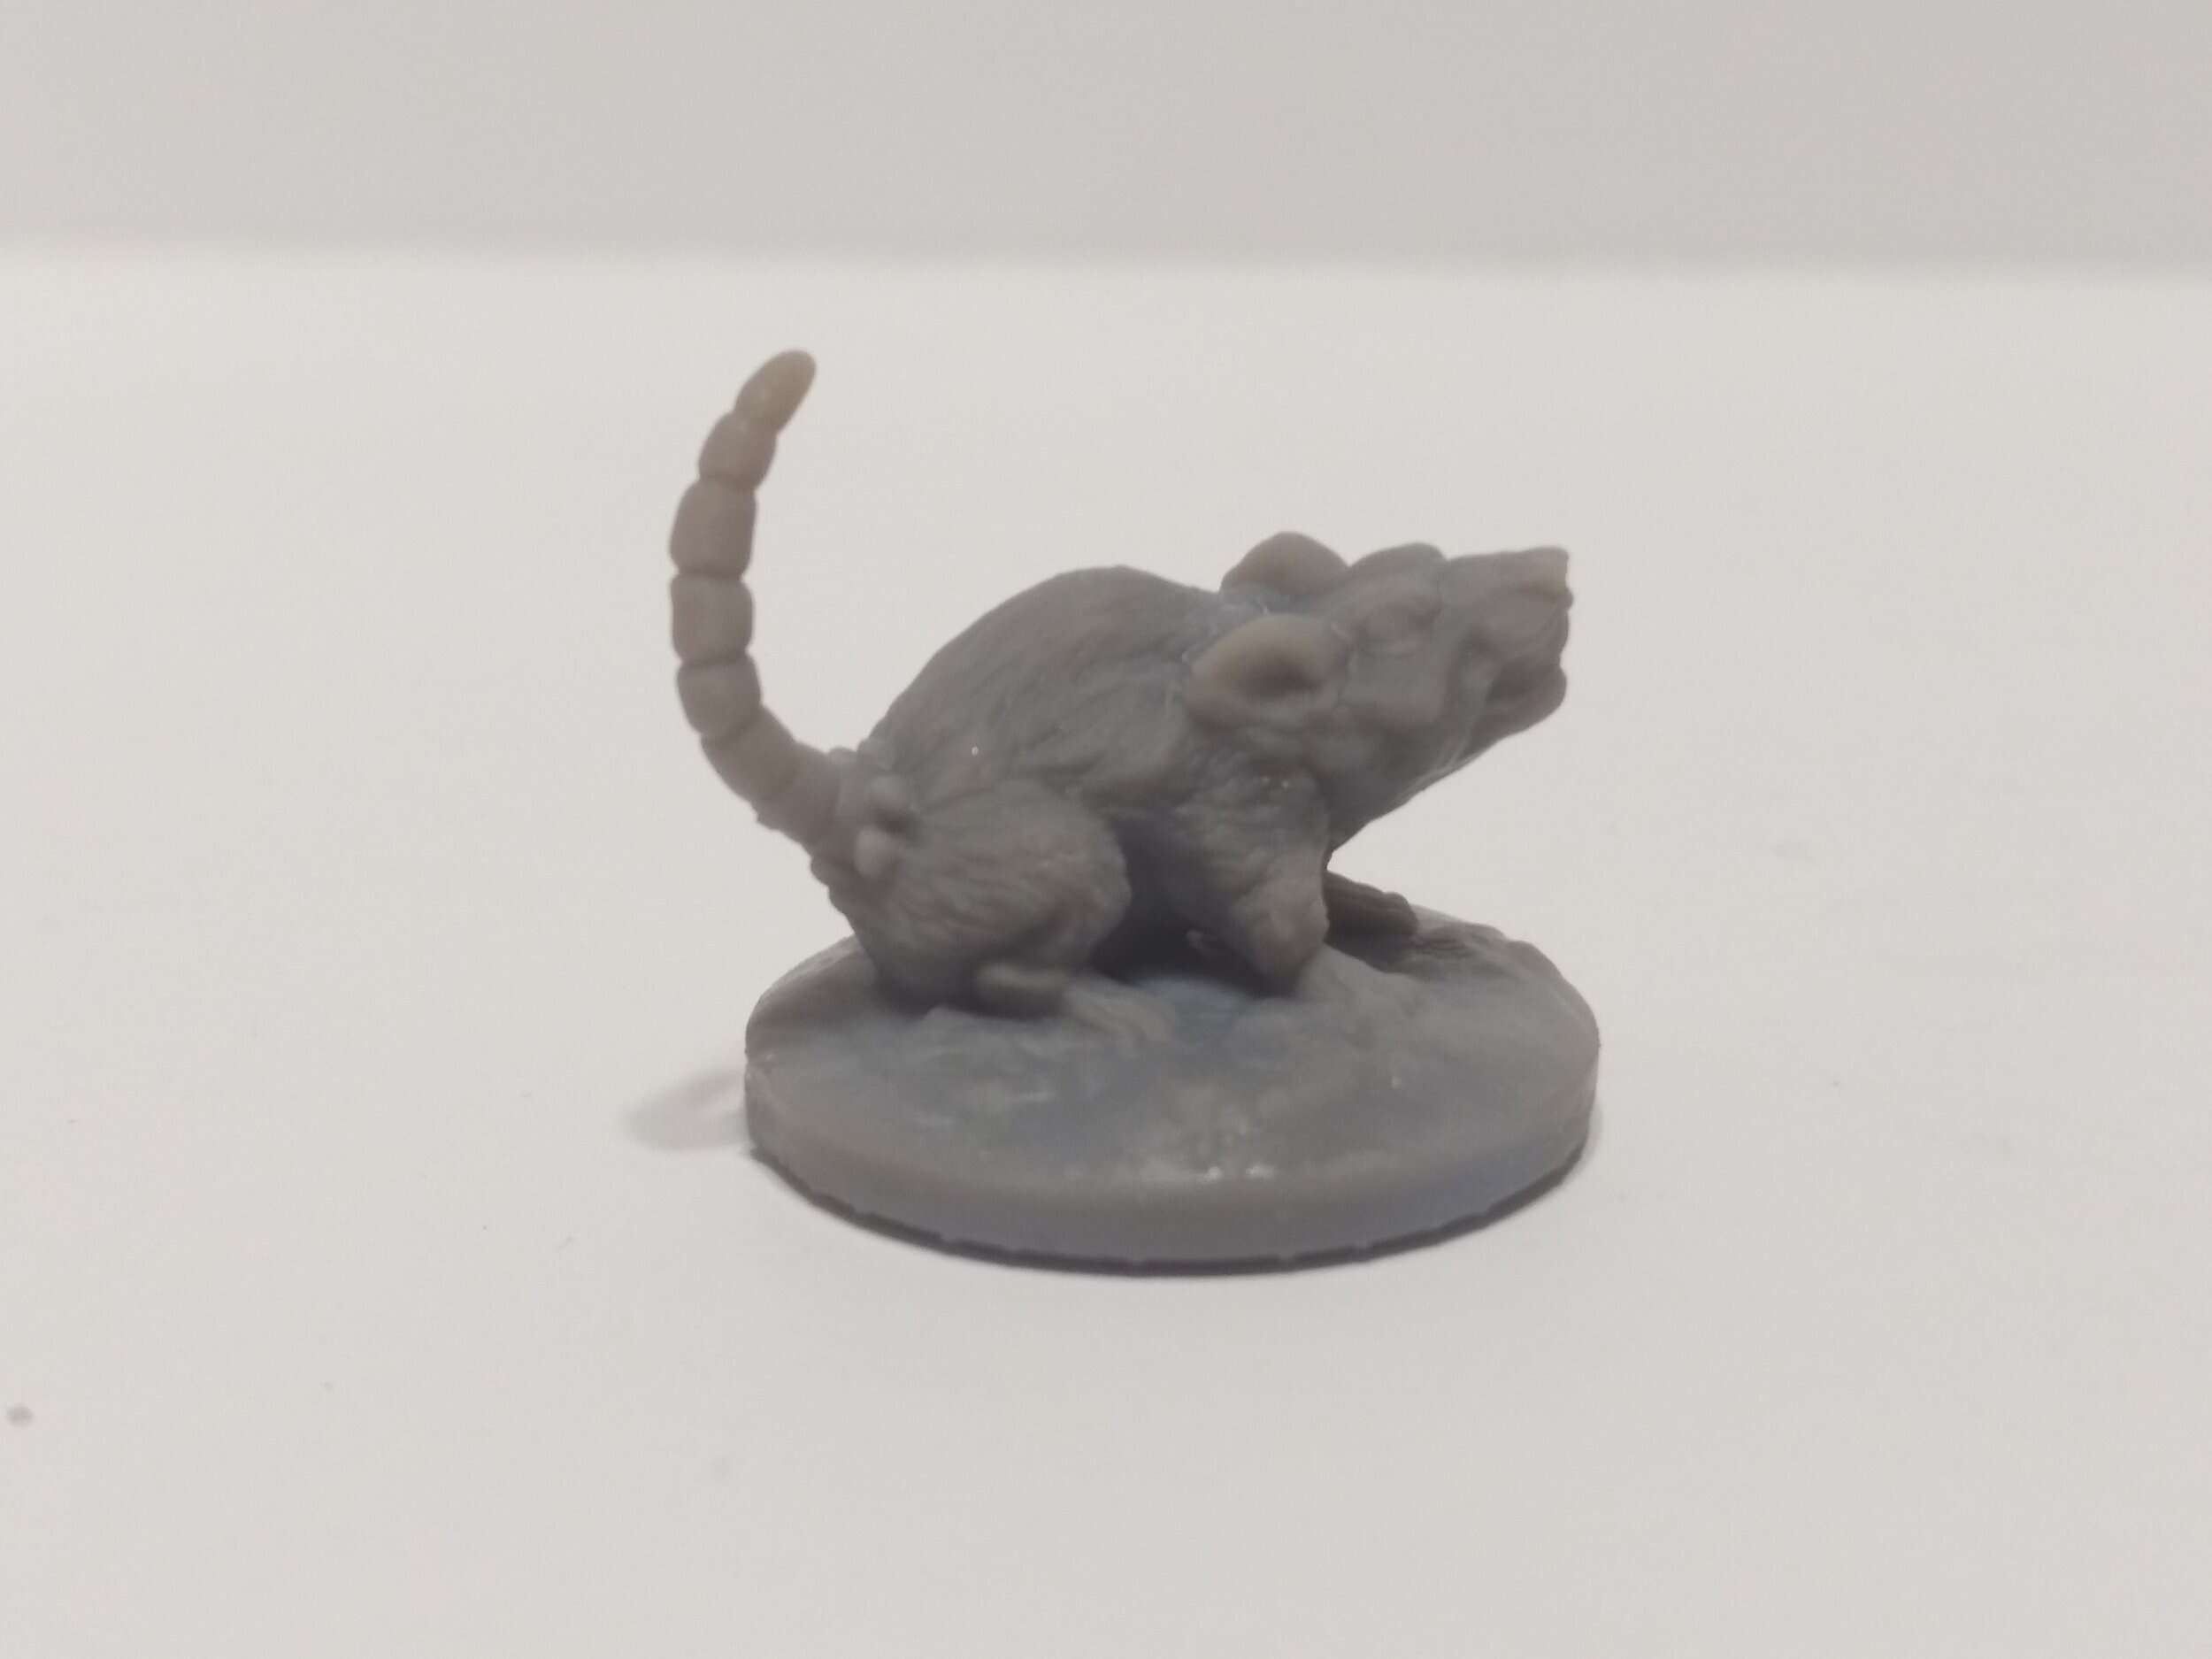 Dragonlock Ultimate Miniature Painting Holder — Alter3dimensya